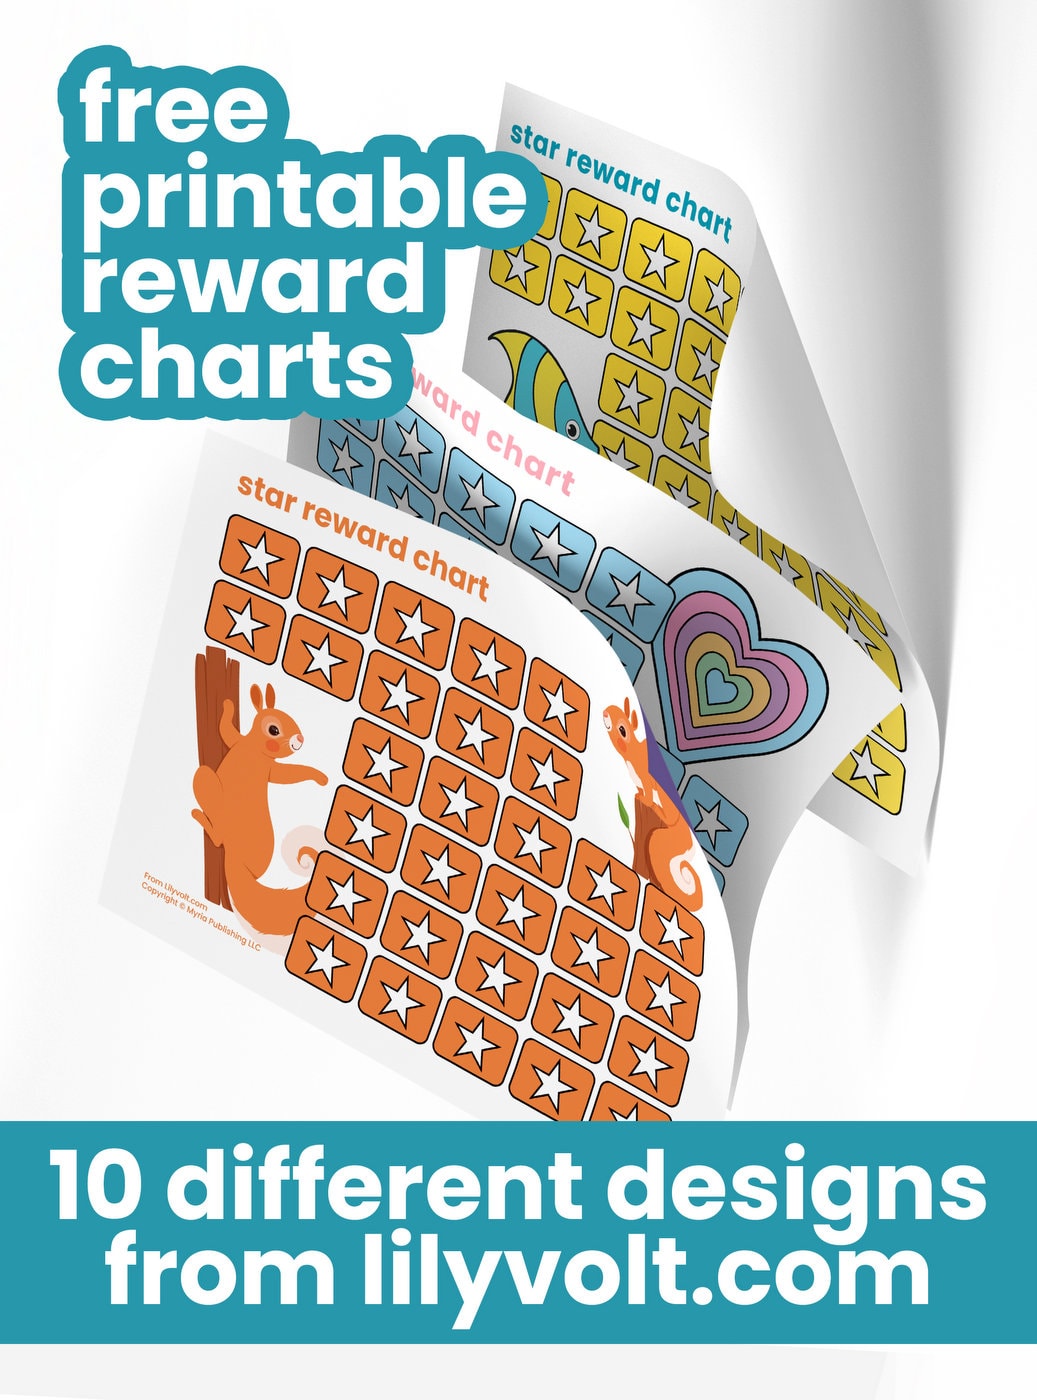 Free printable reward charts Fill in the stars